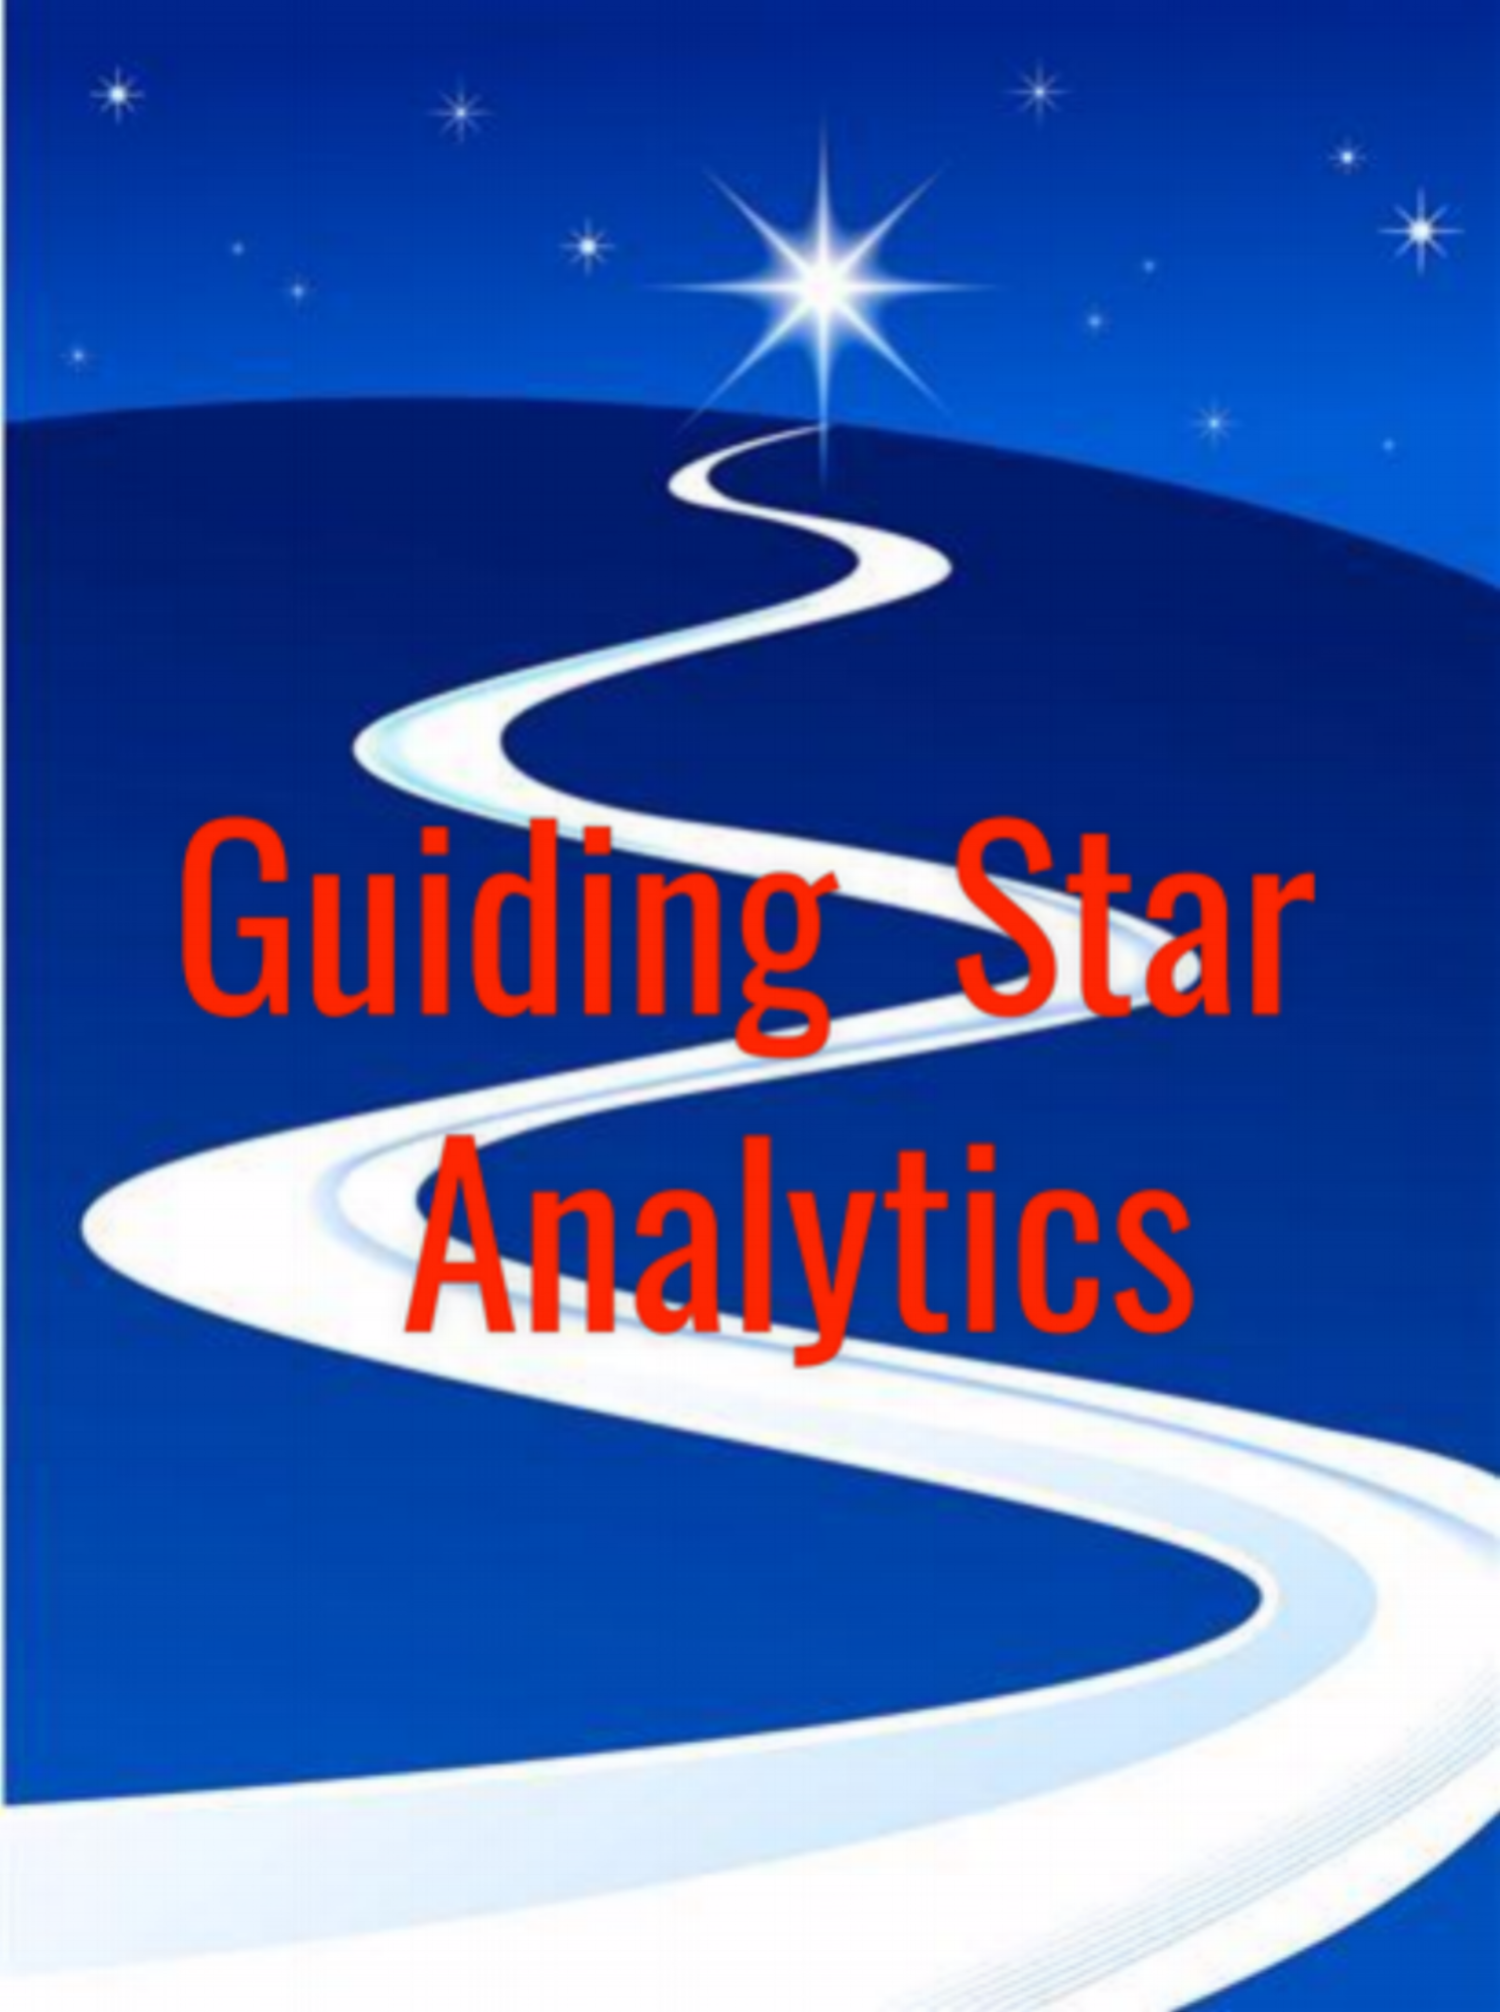 Guiding Star Analytics LLC